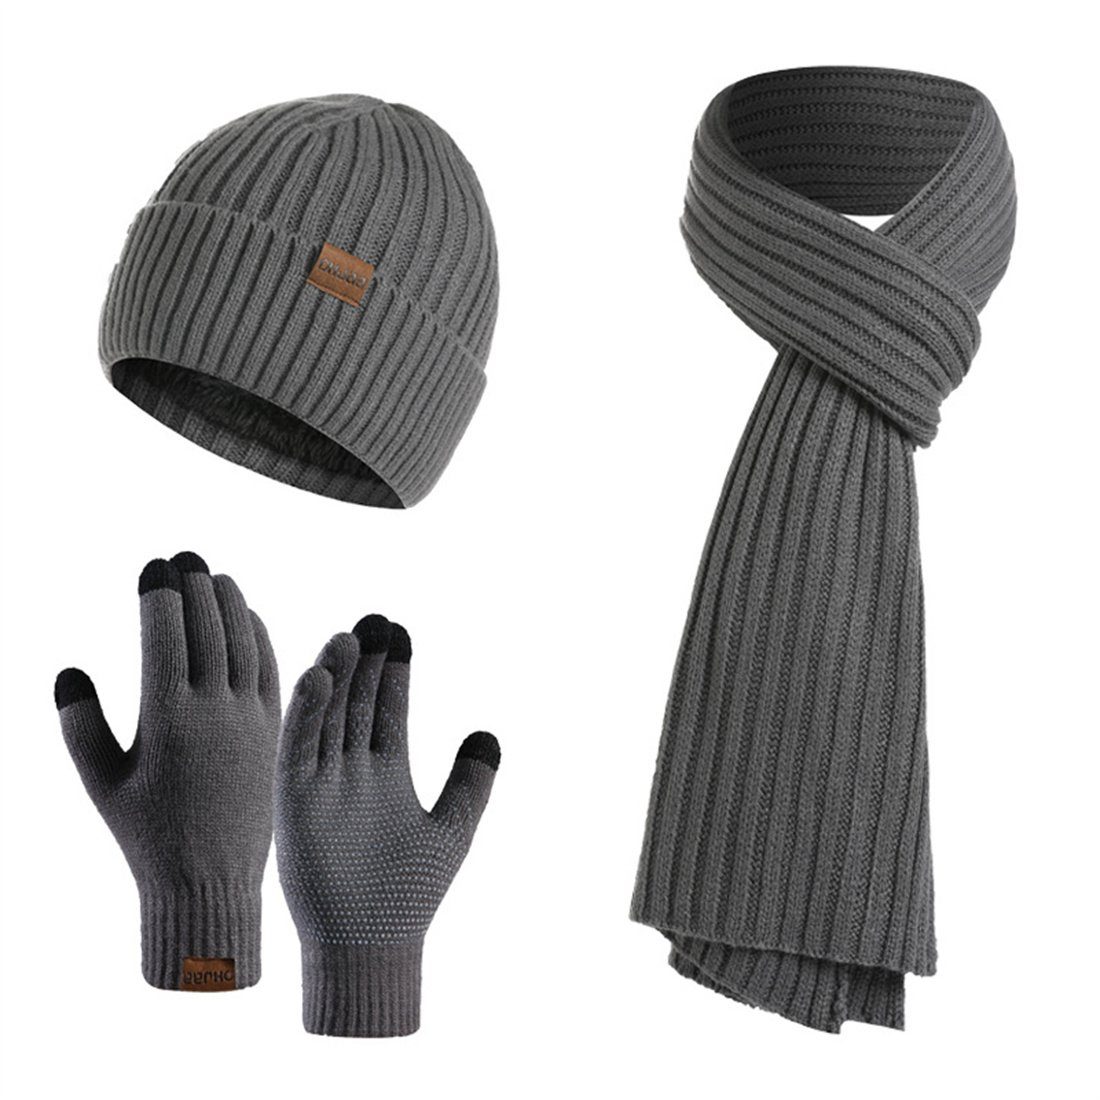 DÖRÖY Strickmütze Unisex Winter Strickmütze, Solid Farbe Hut Schal Handschuhe 3er Set dunkelgrau | Strickmützen